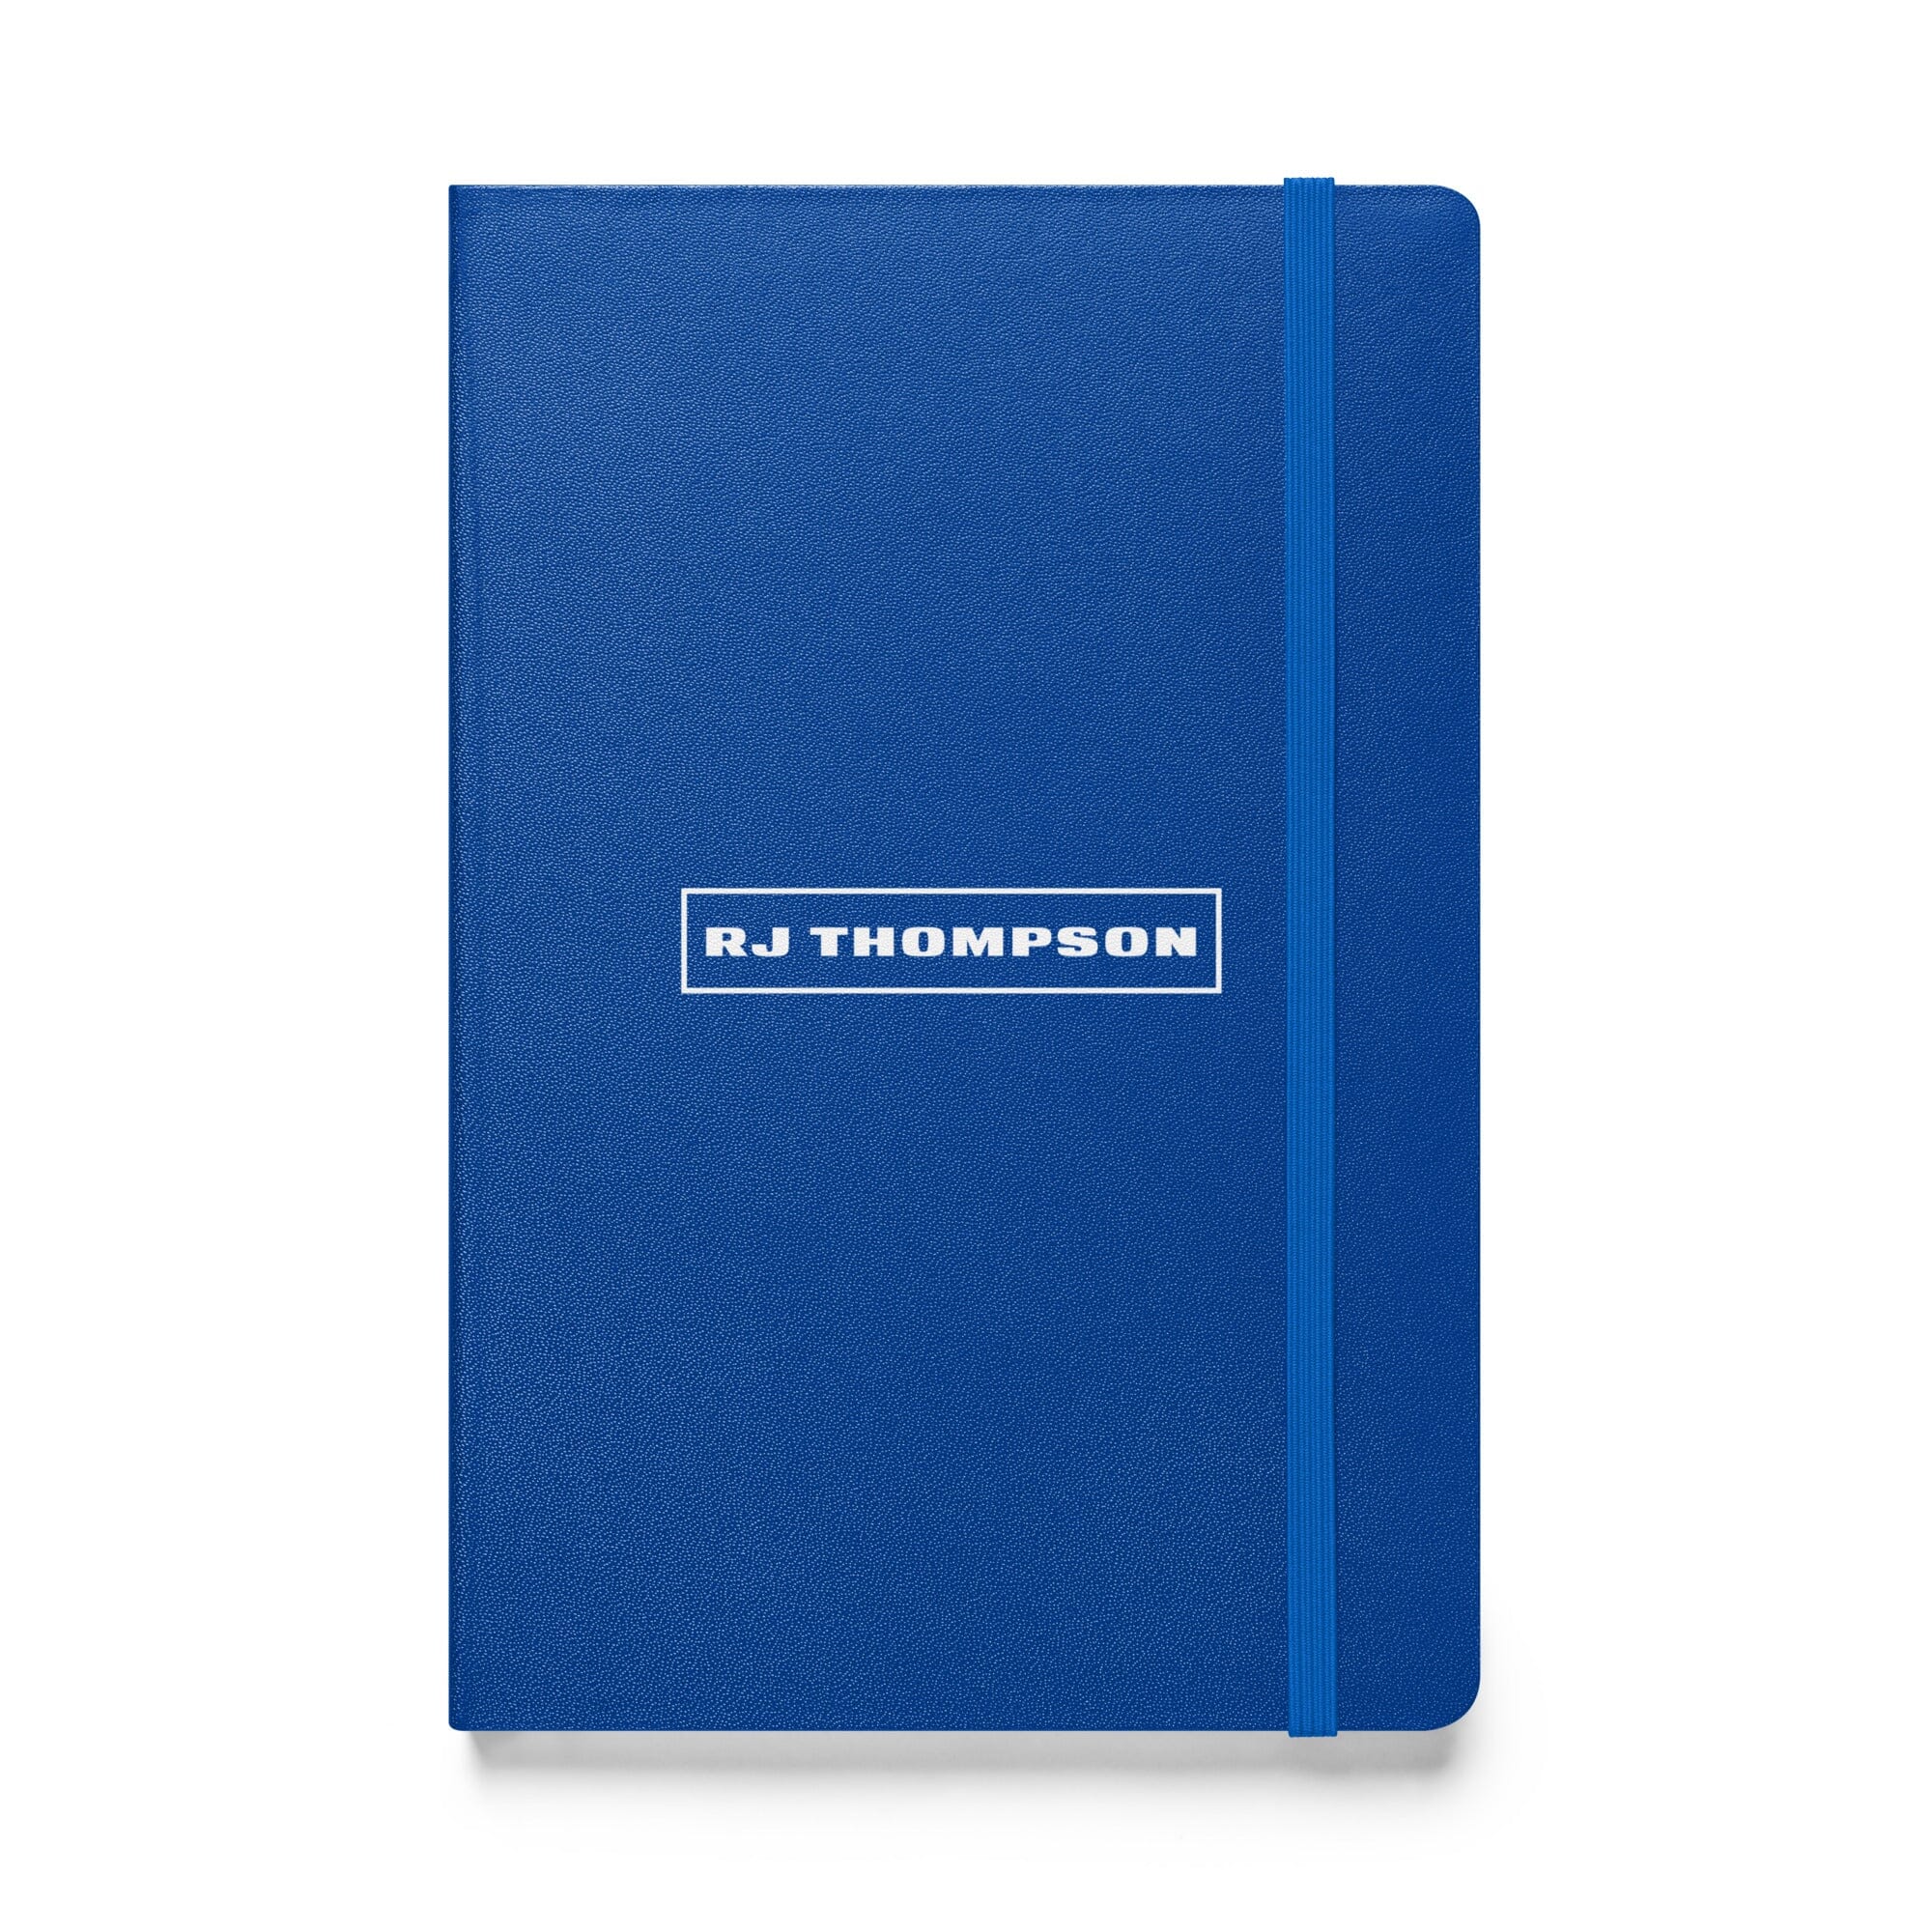 "RJ Thompson" Hardcover Bound Notebook | RJ Thompson | Official Website & Store